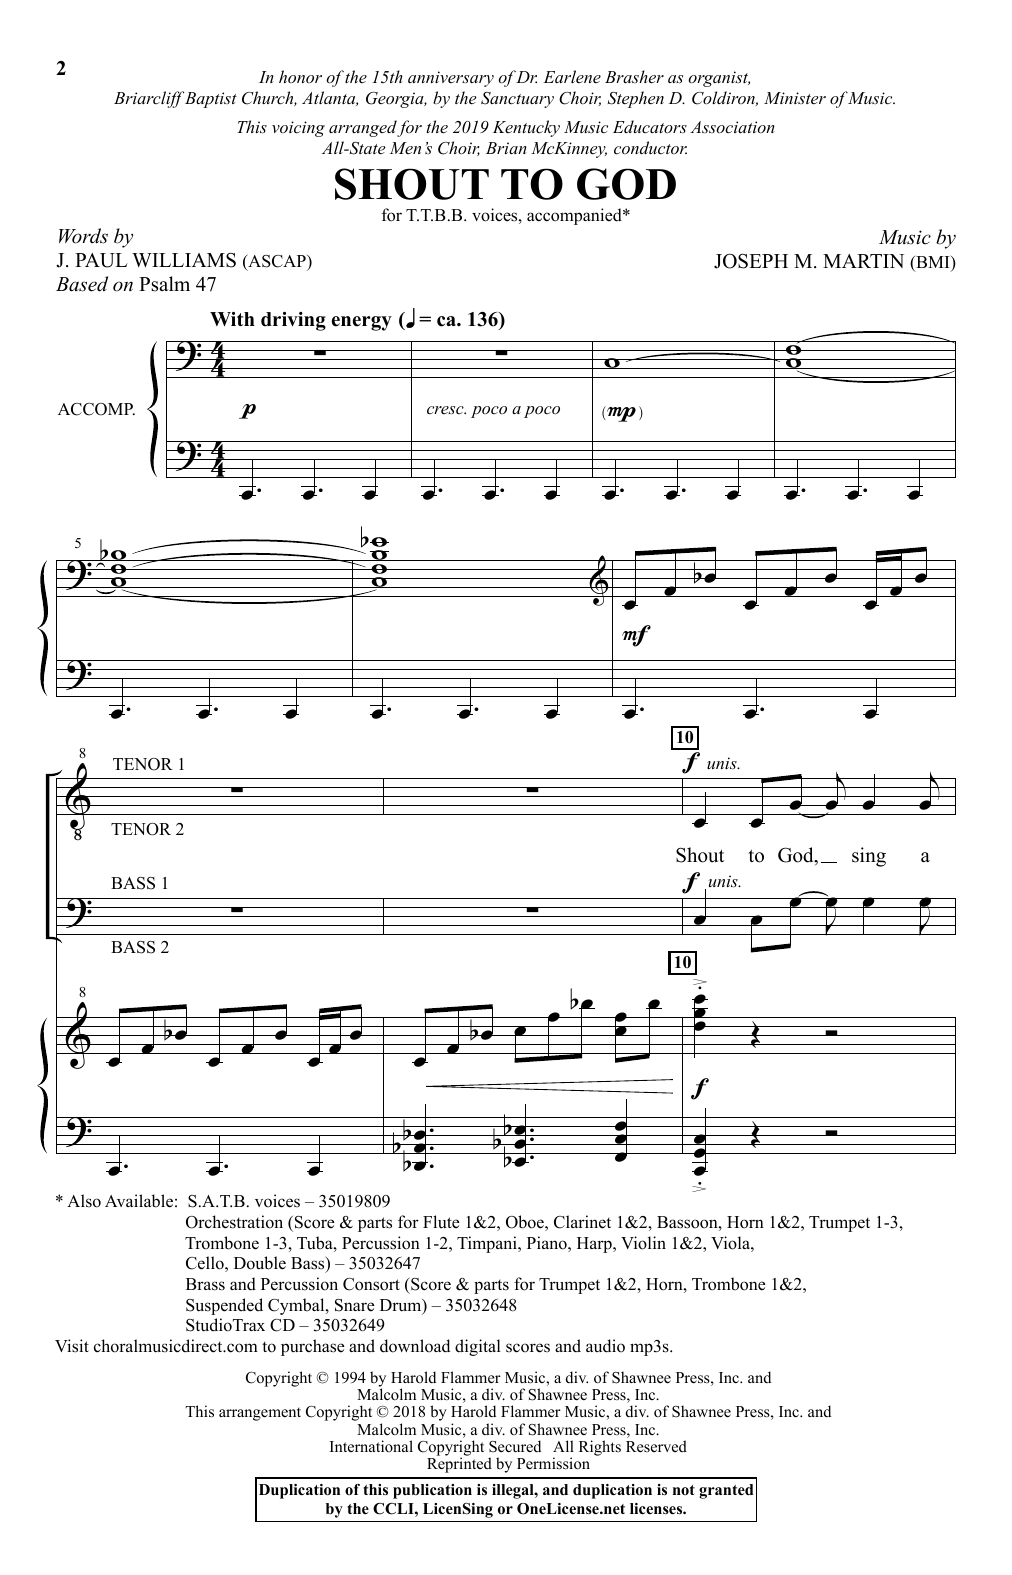 J. Paul Williams & Joseph M. Martin Shout To God Sheet Music Notes & Chords for TTBB Choir - Download or Print PDF